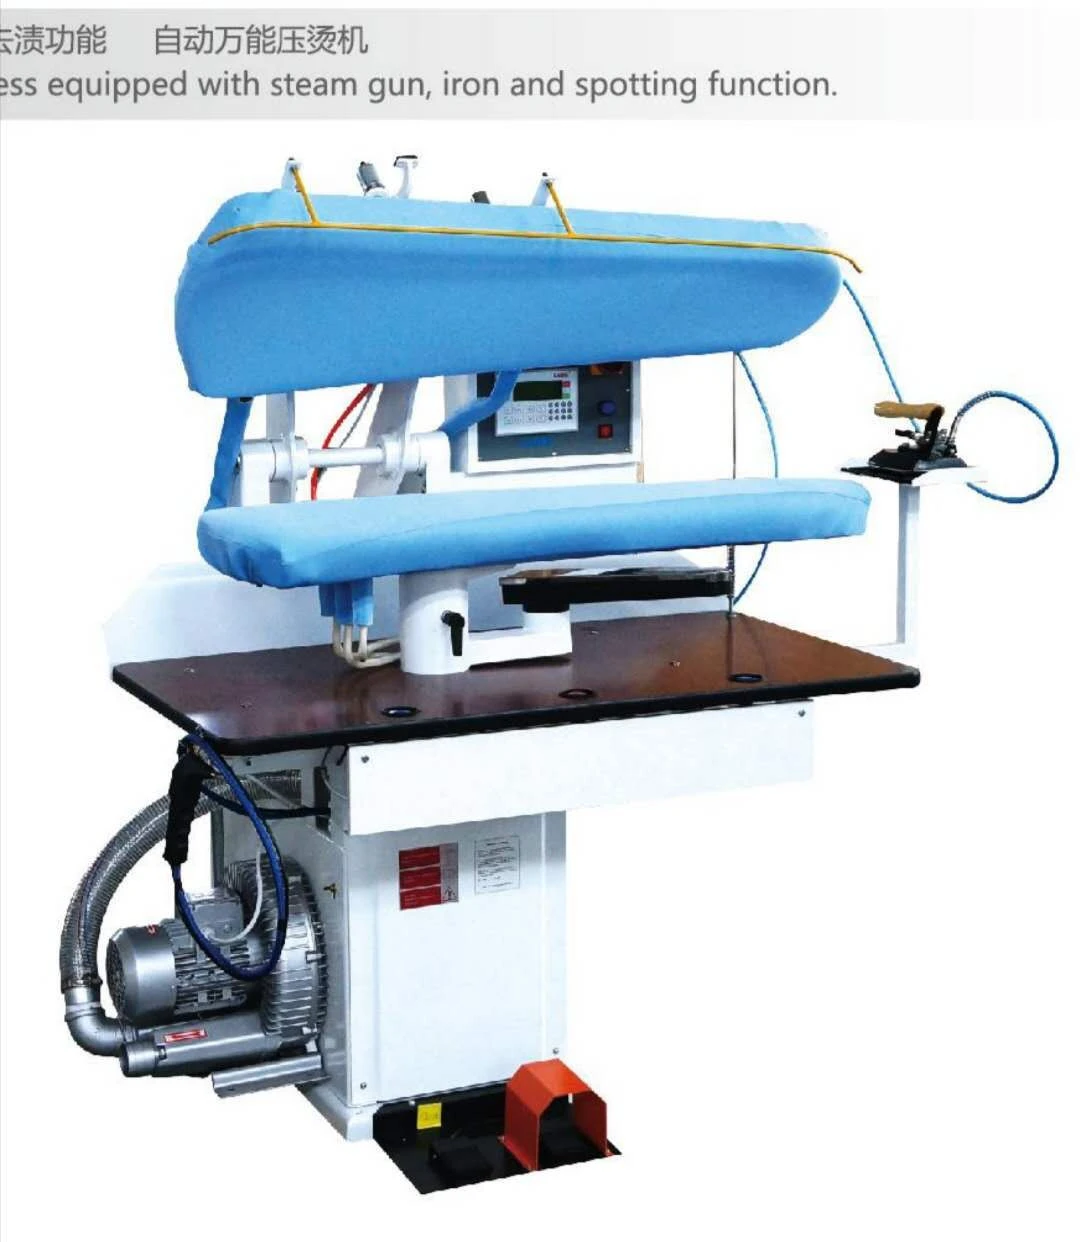 Ironing table universal laundry press machine